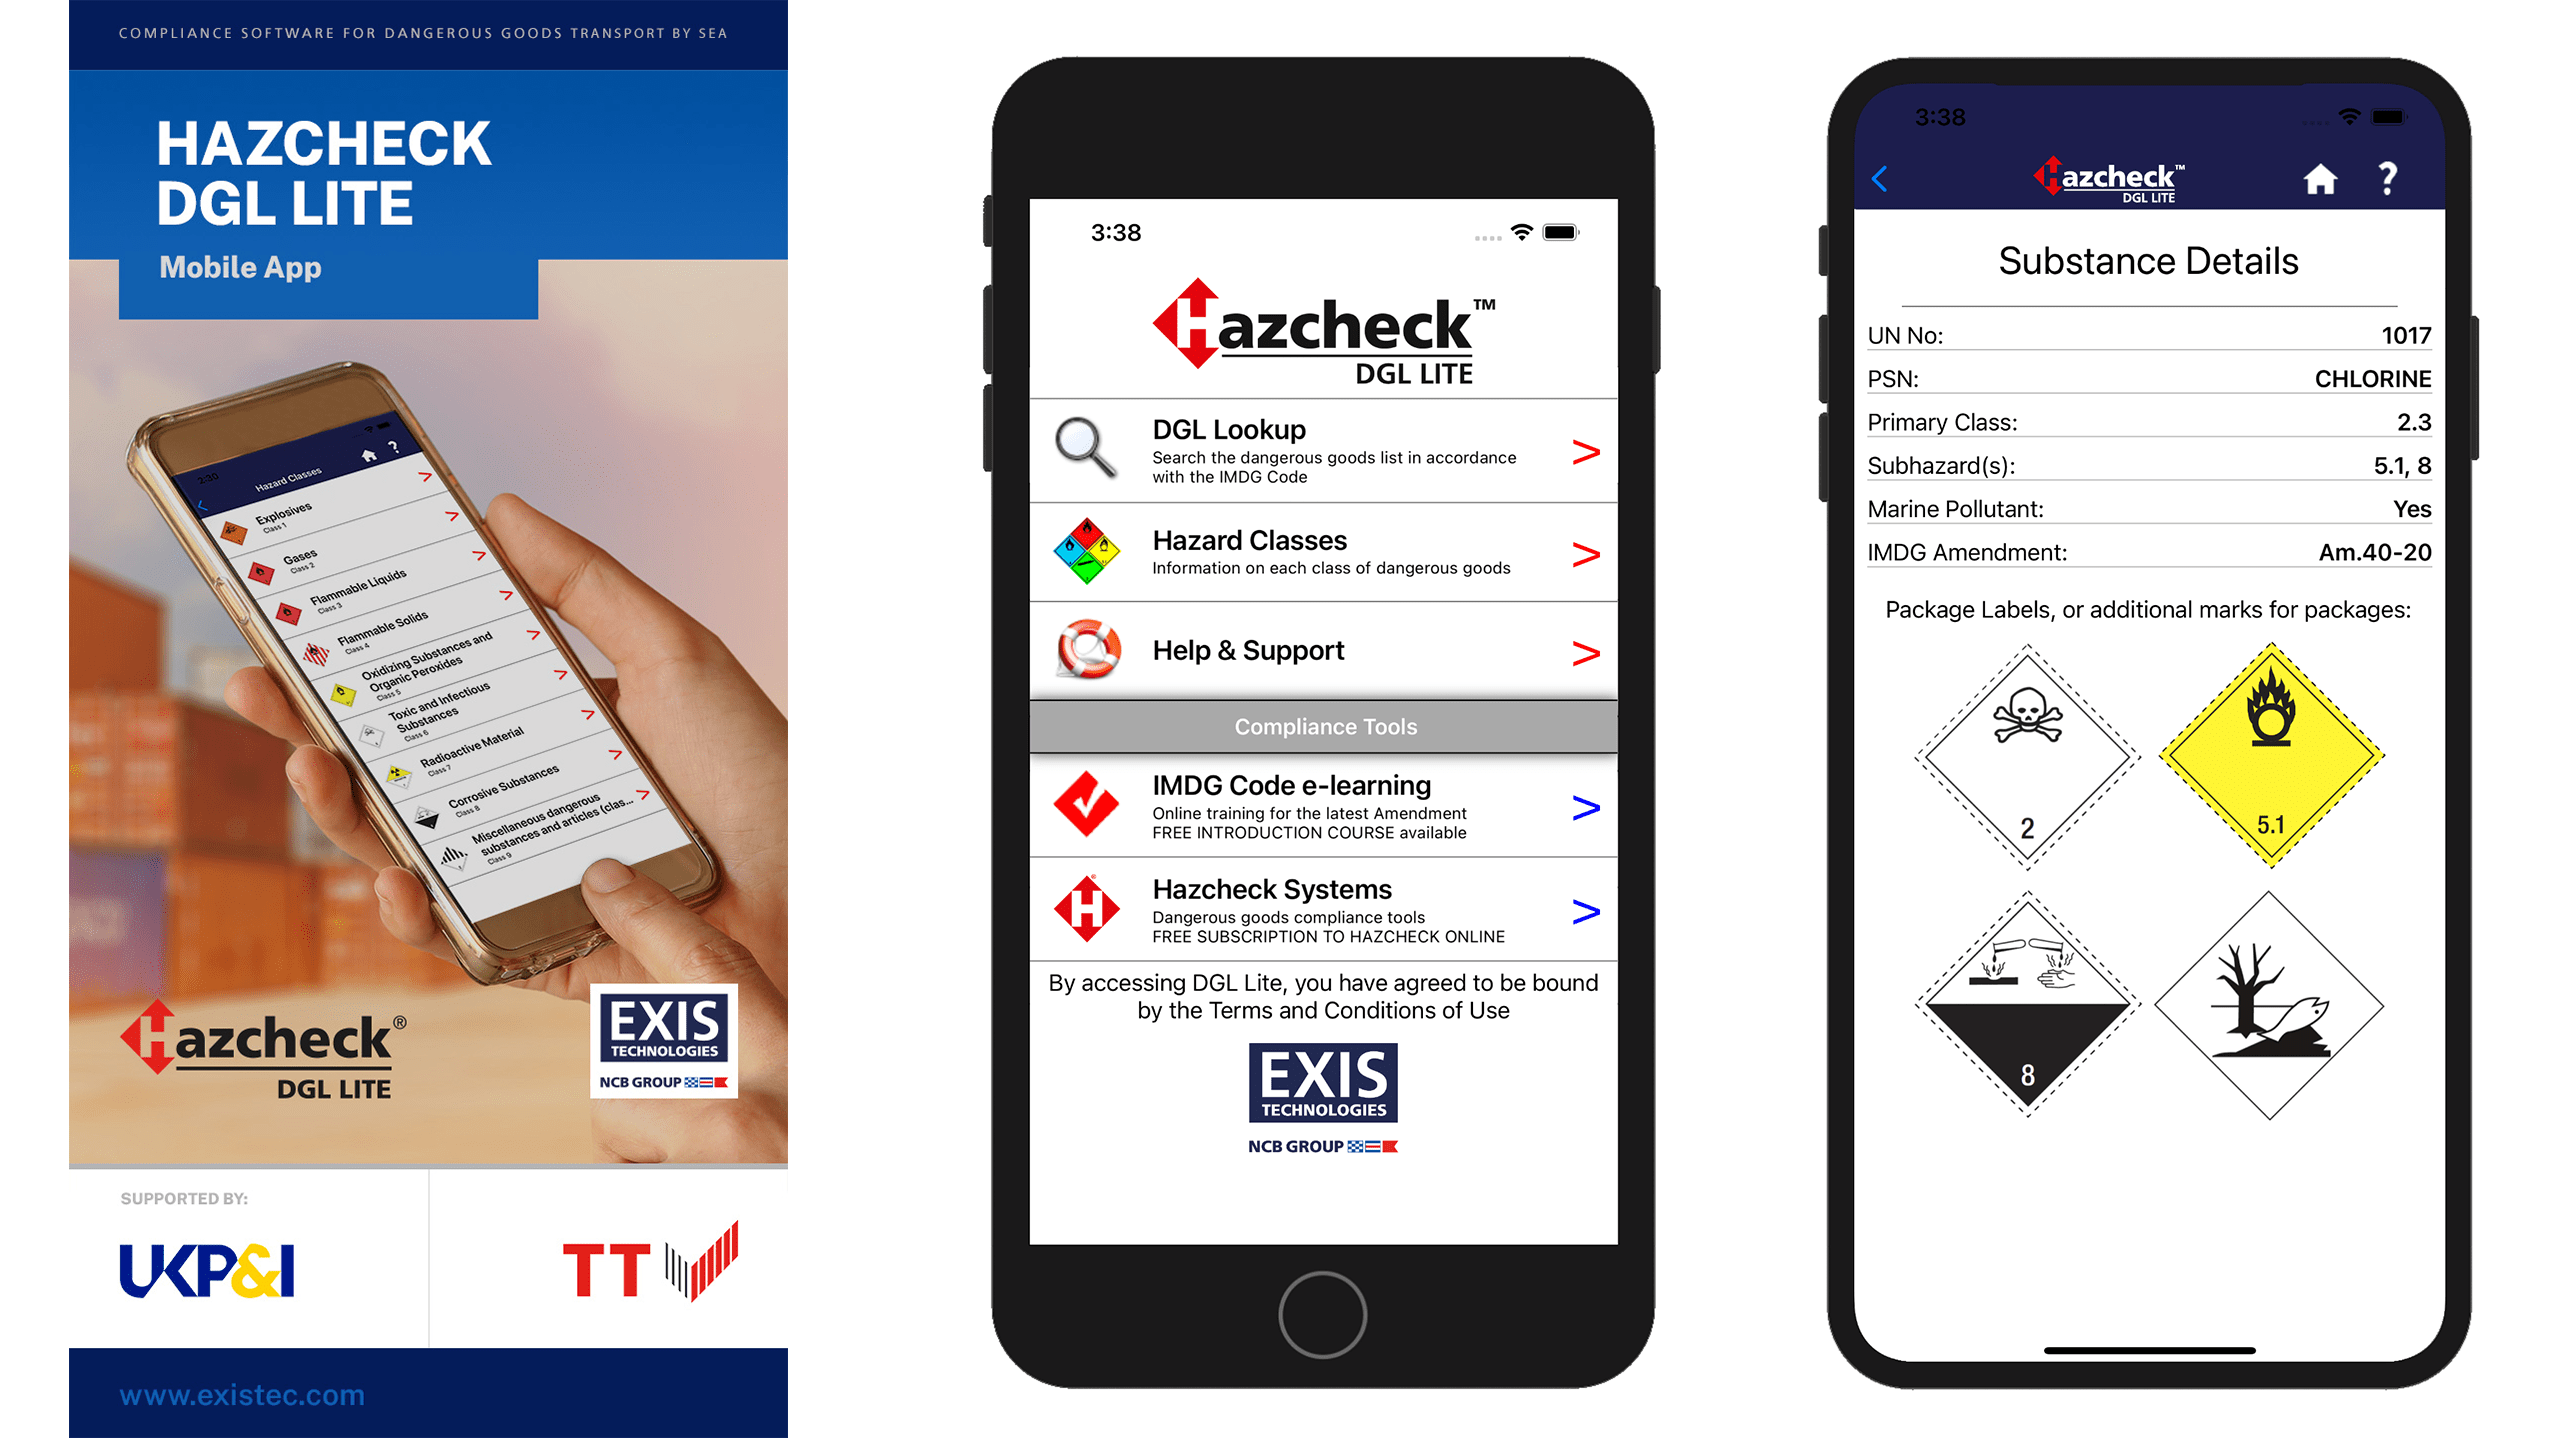 Hazcheck DGL Lite mobile app